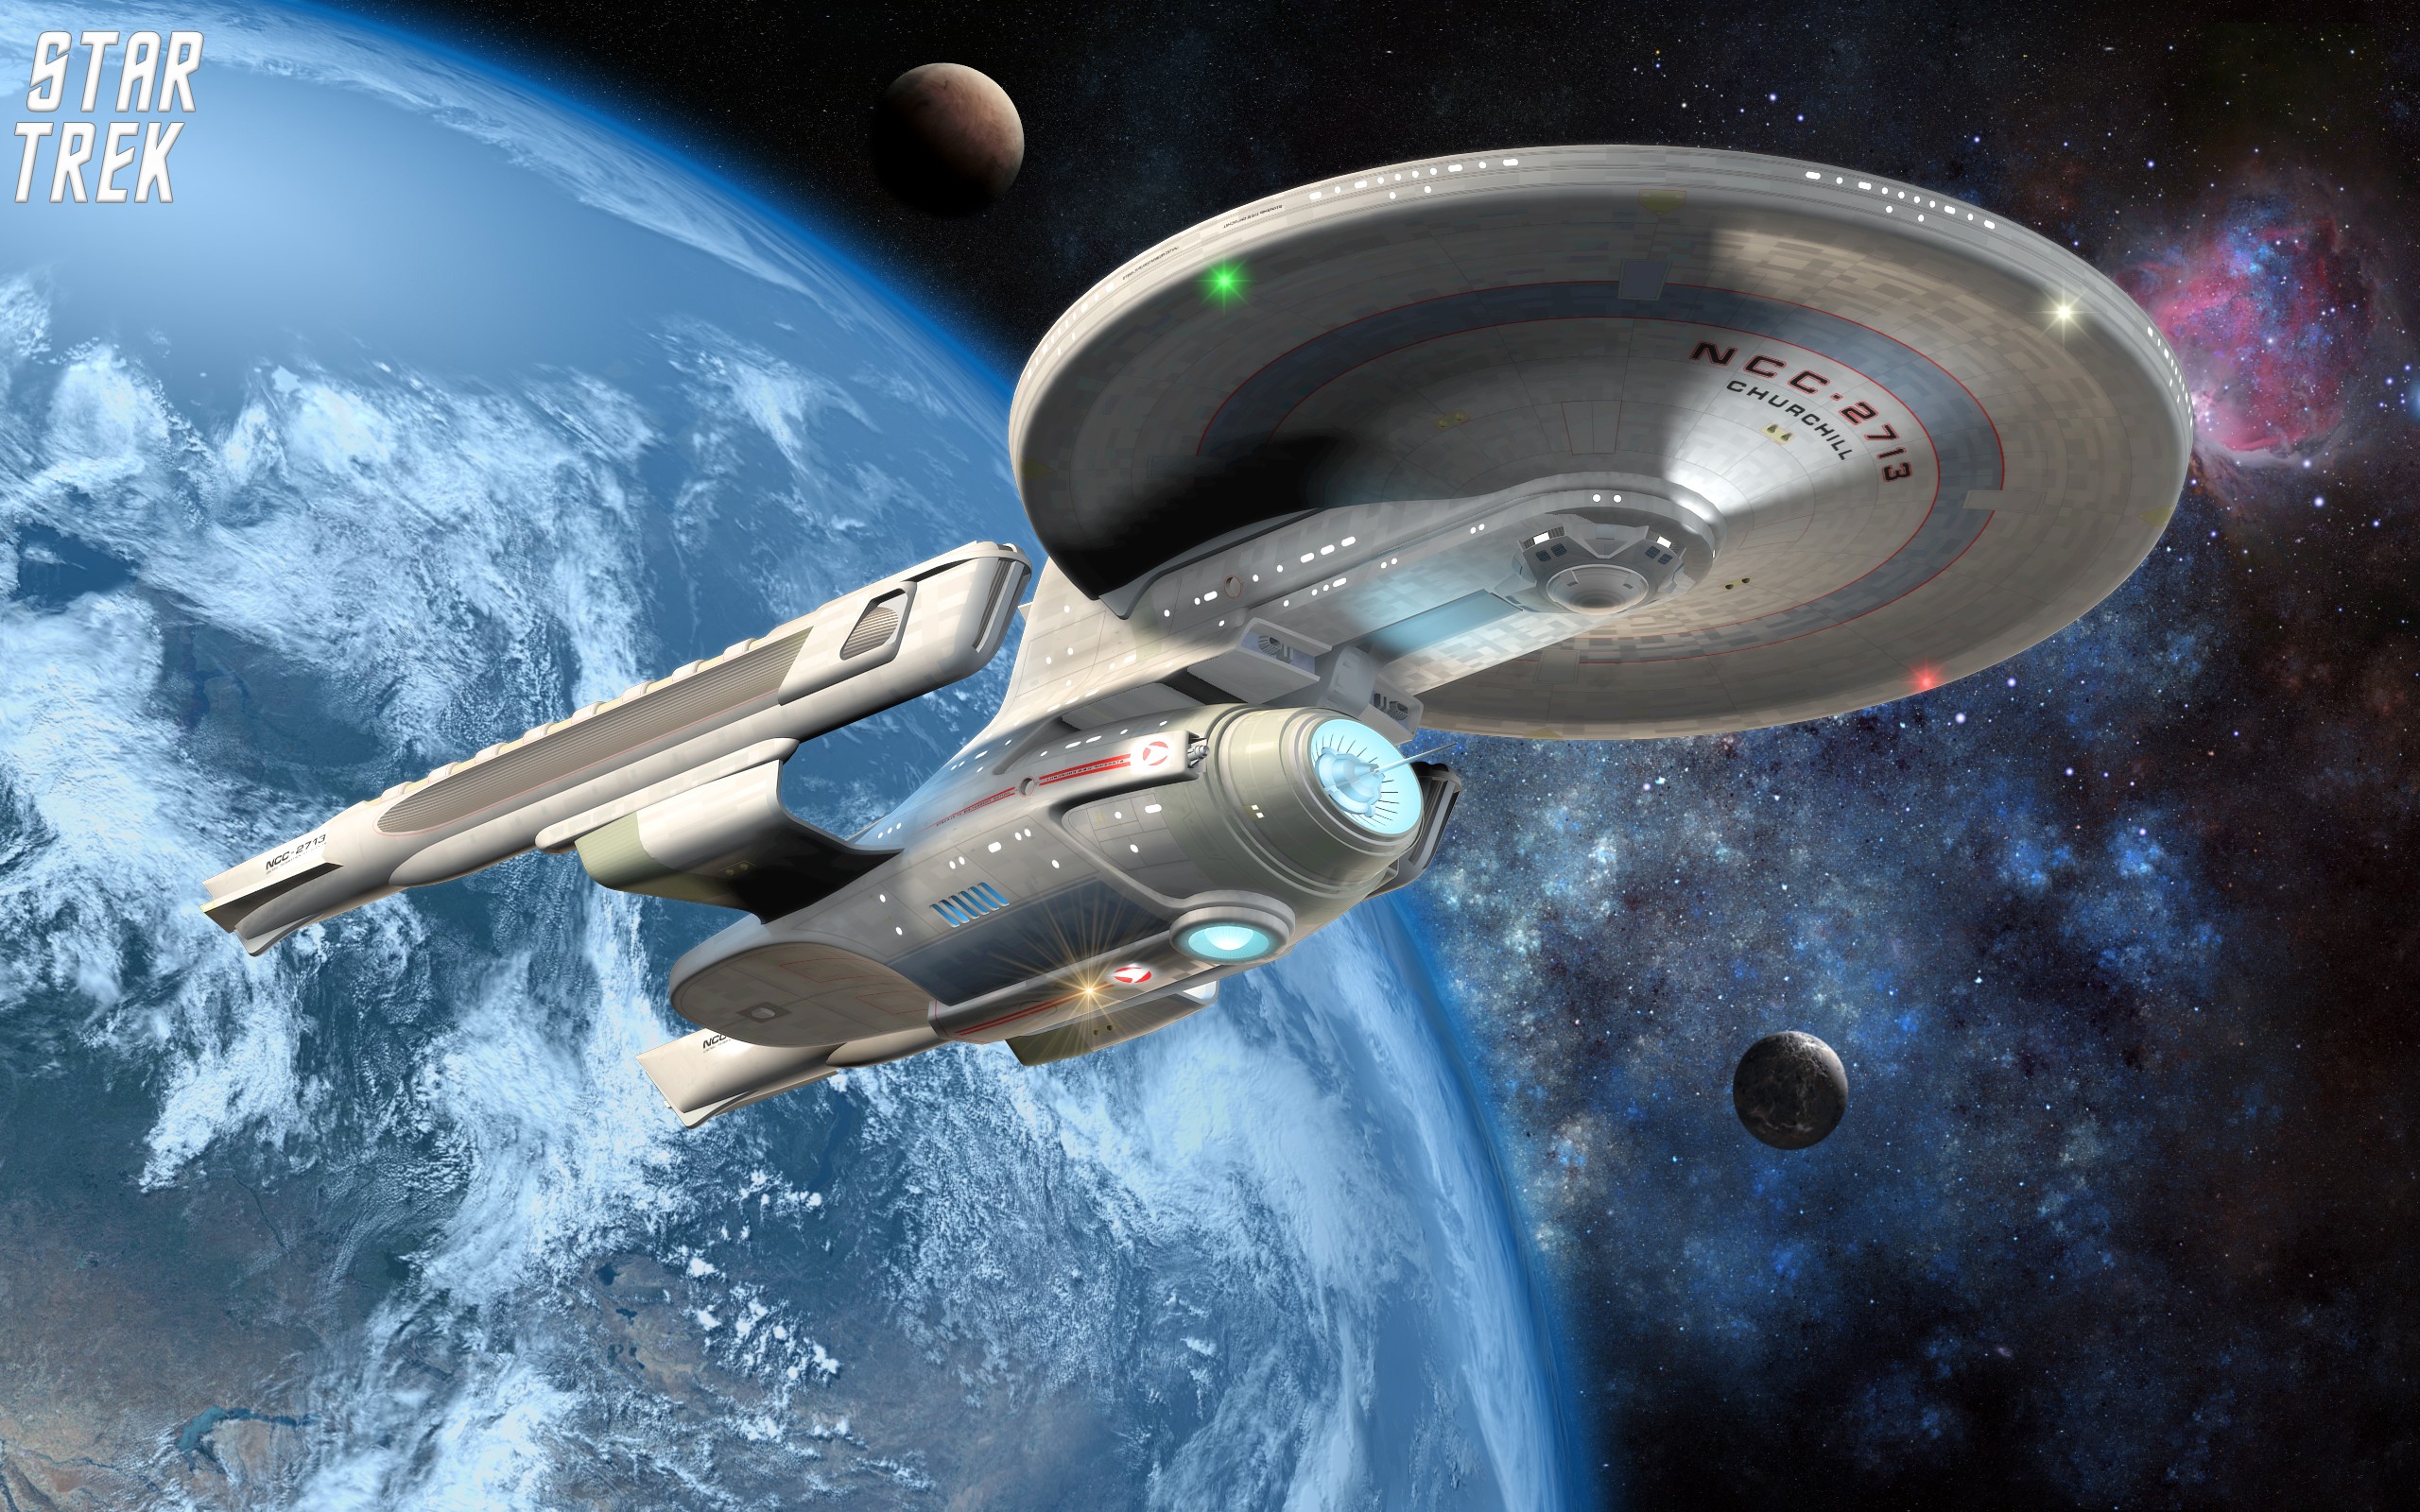 General 2560x1600 Star Trek spaceship space fan art vehicle planet science fiction Star Trek Ships TV series